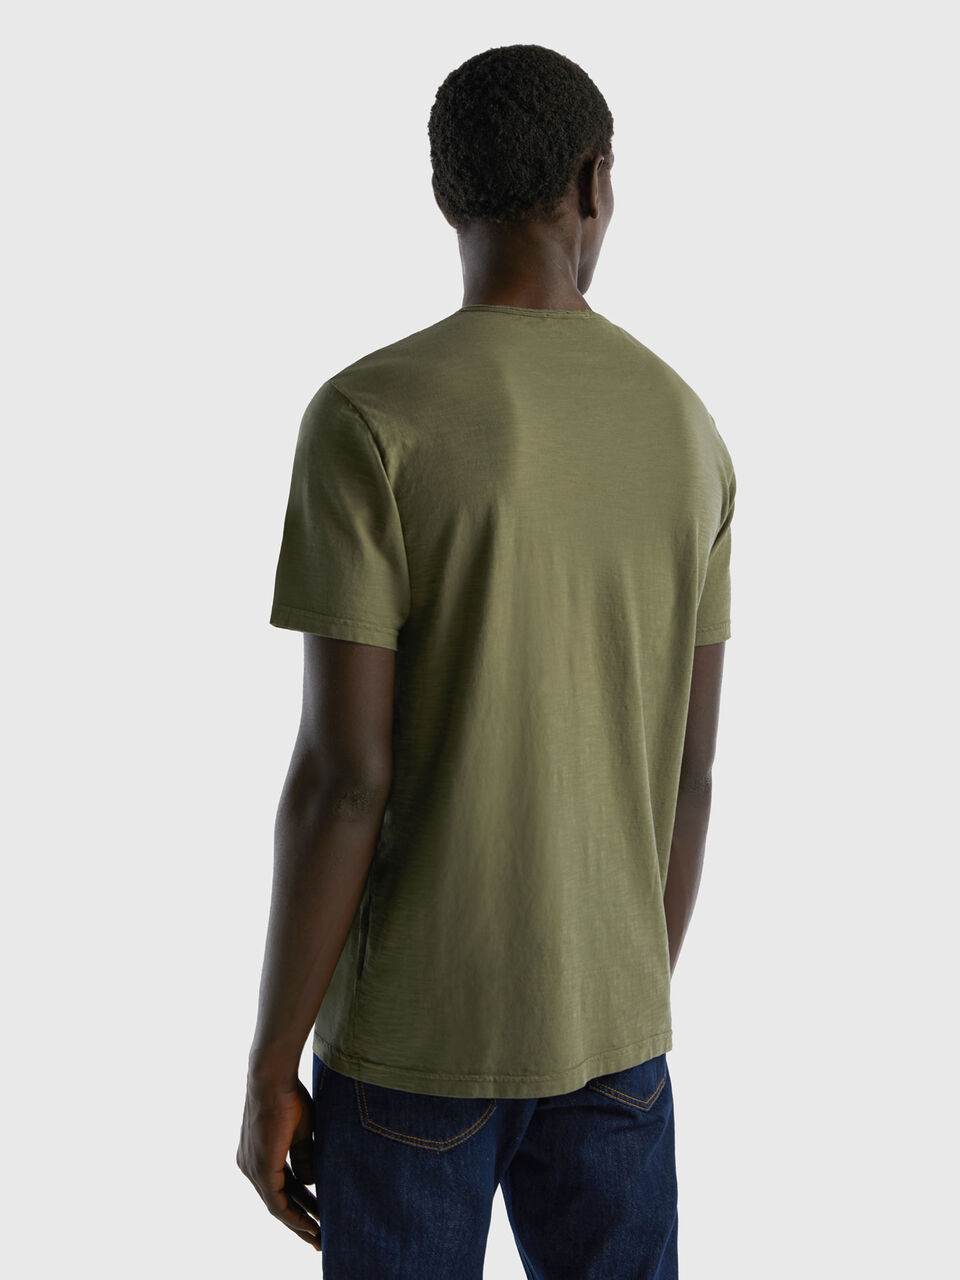 Green t-shirt in slub cotton - Military Green | Benetton